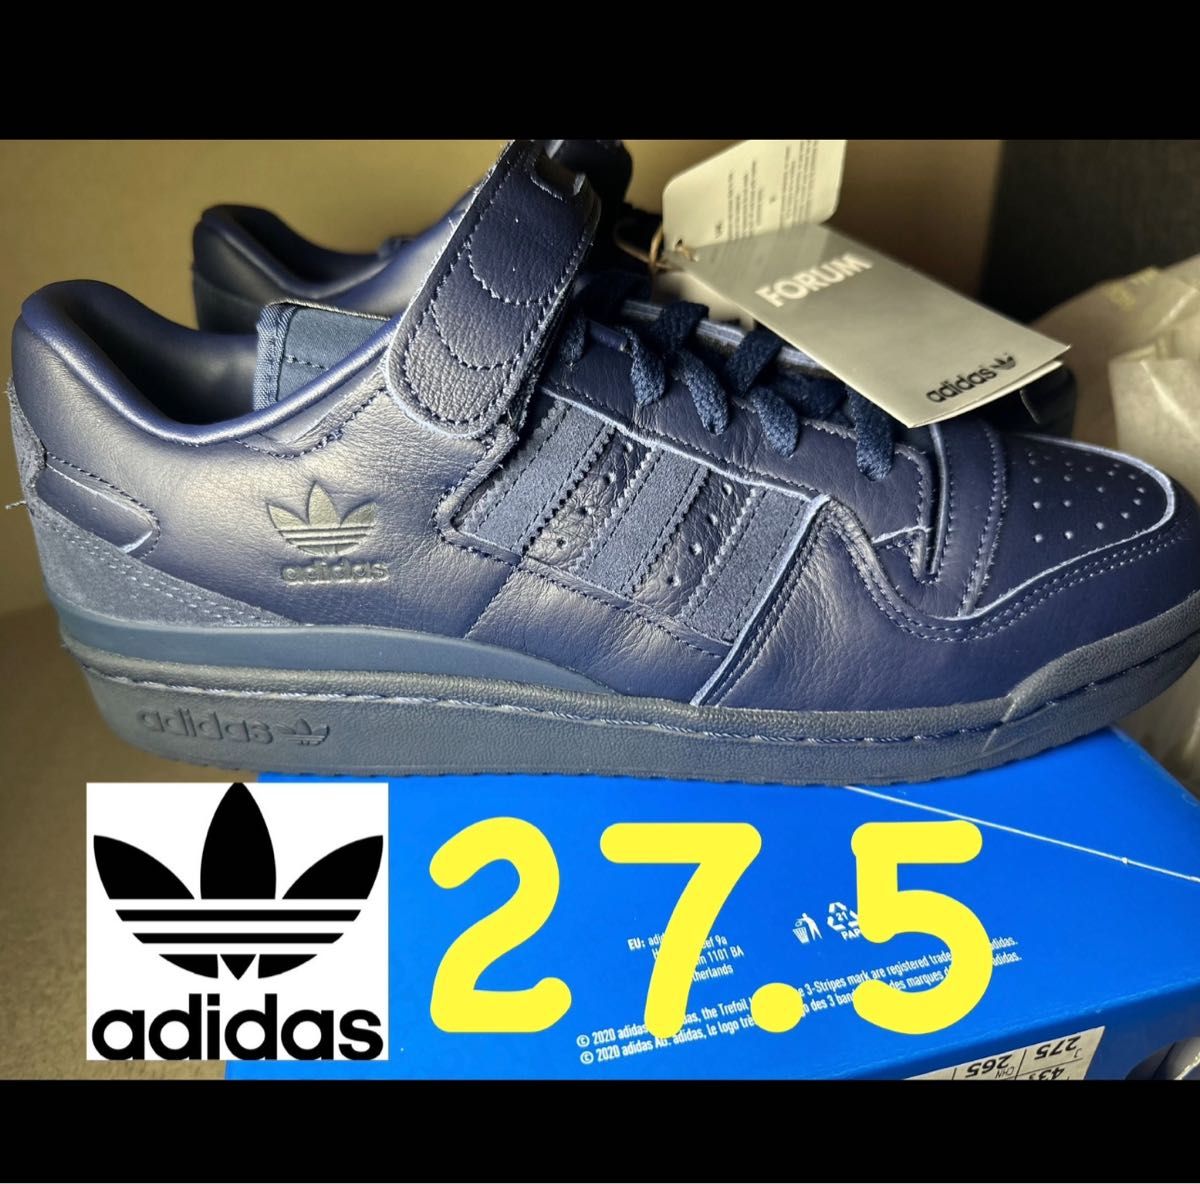 Adidas 27.5cm FORUM 84 LOW FS